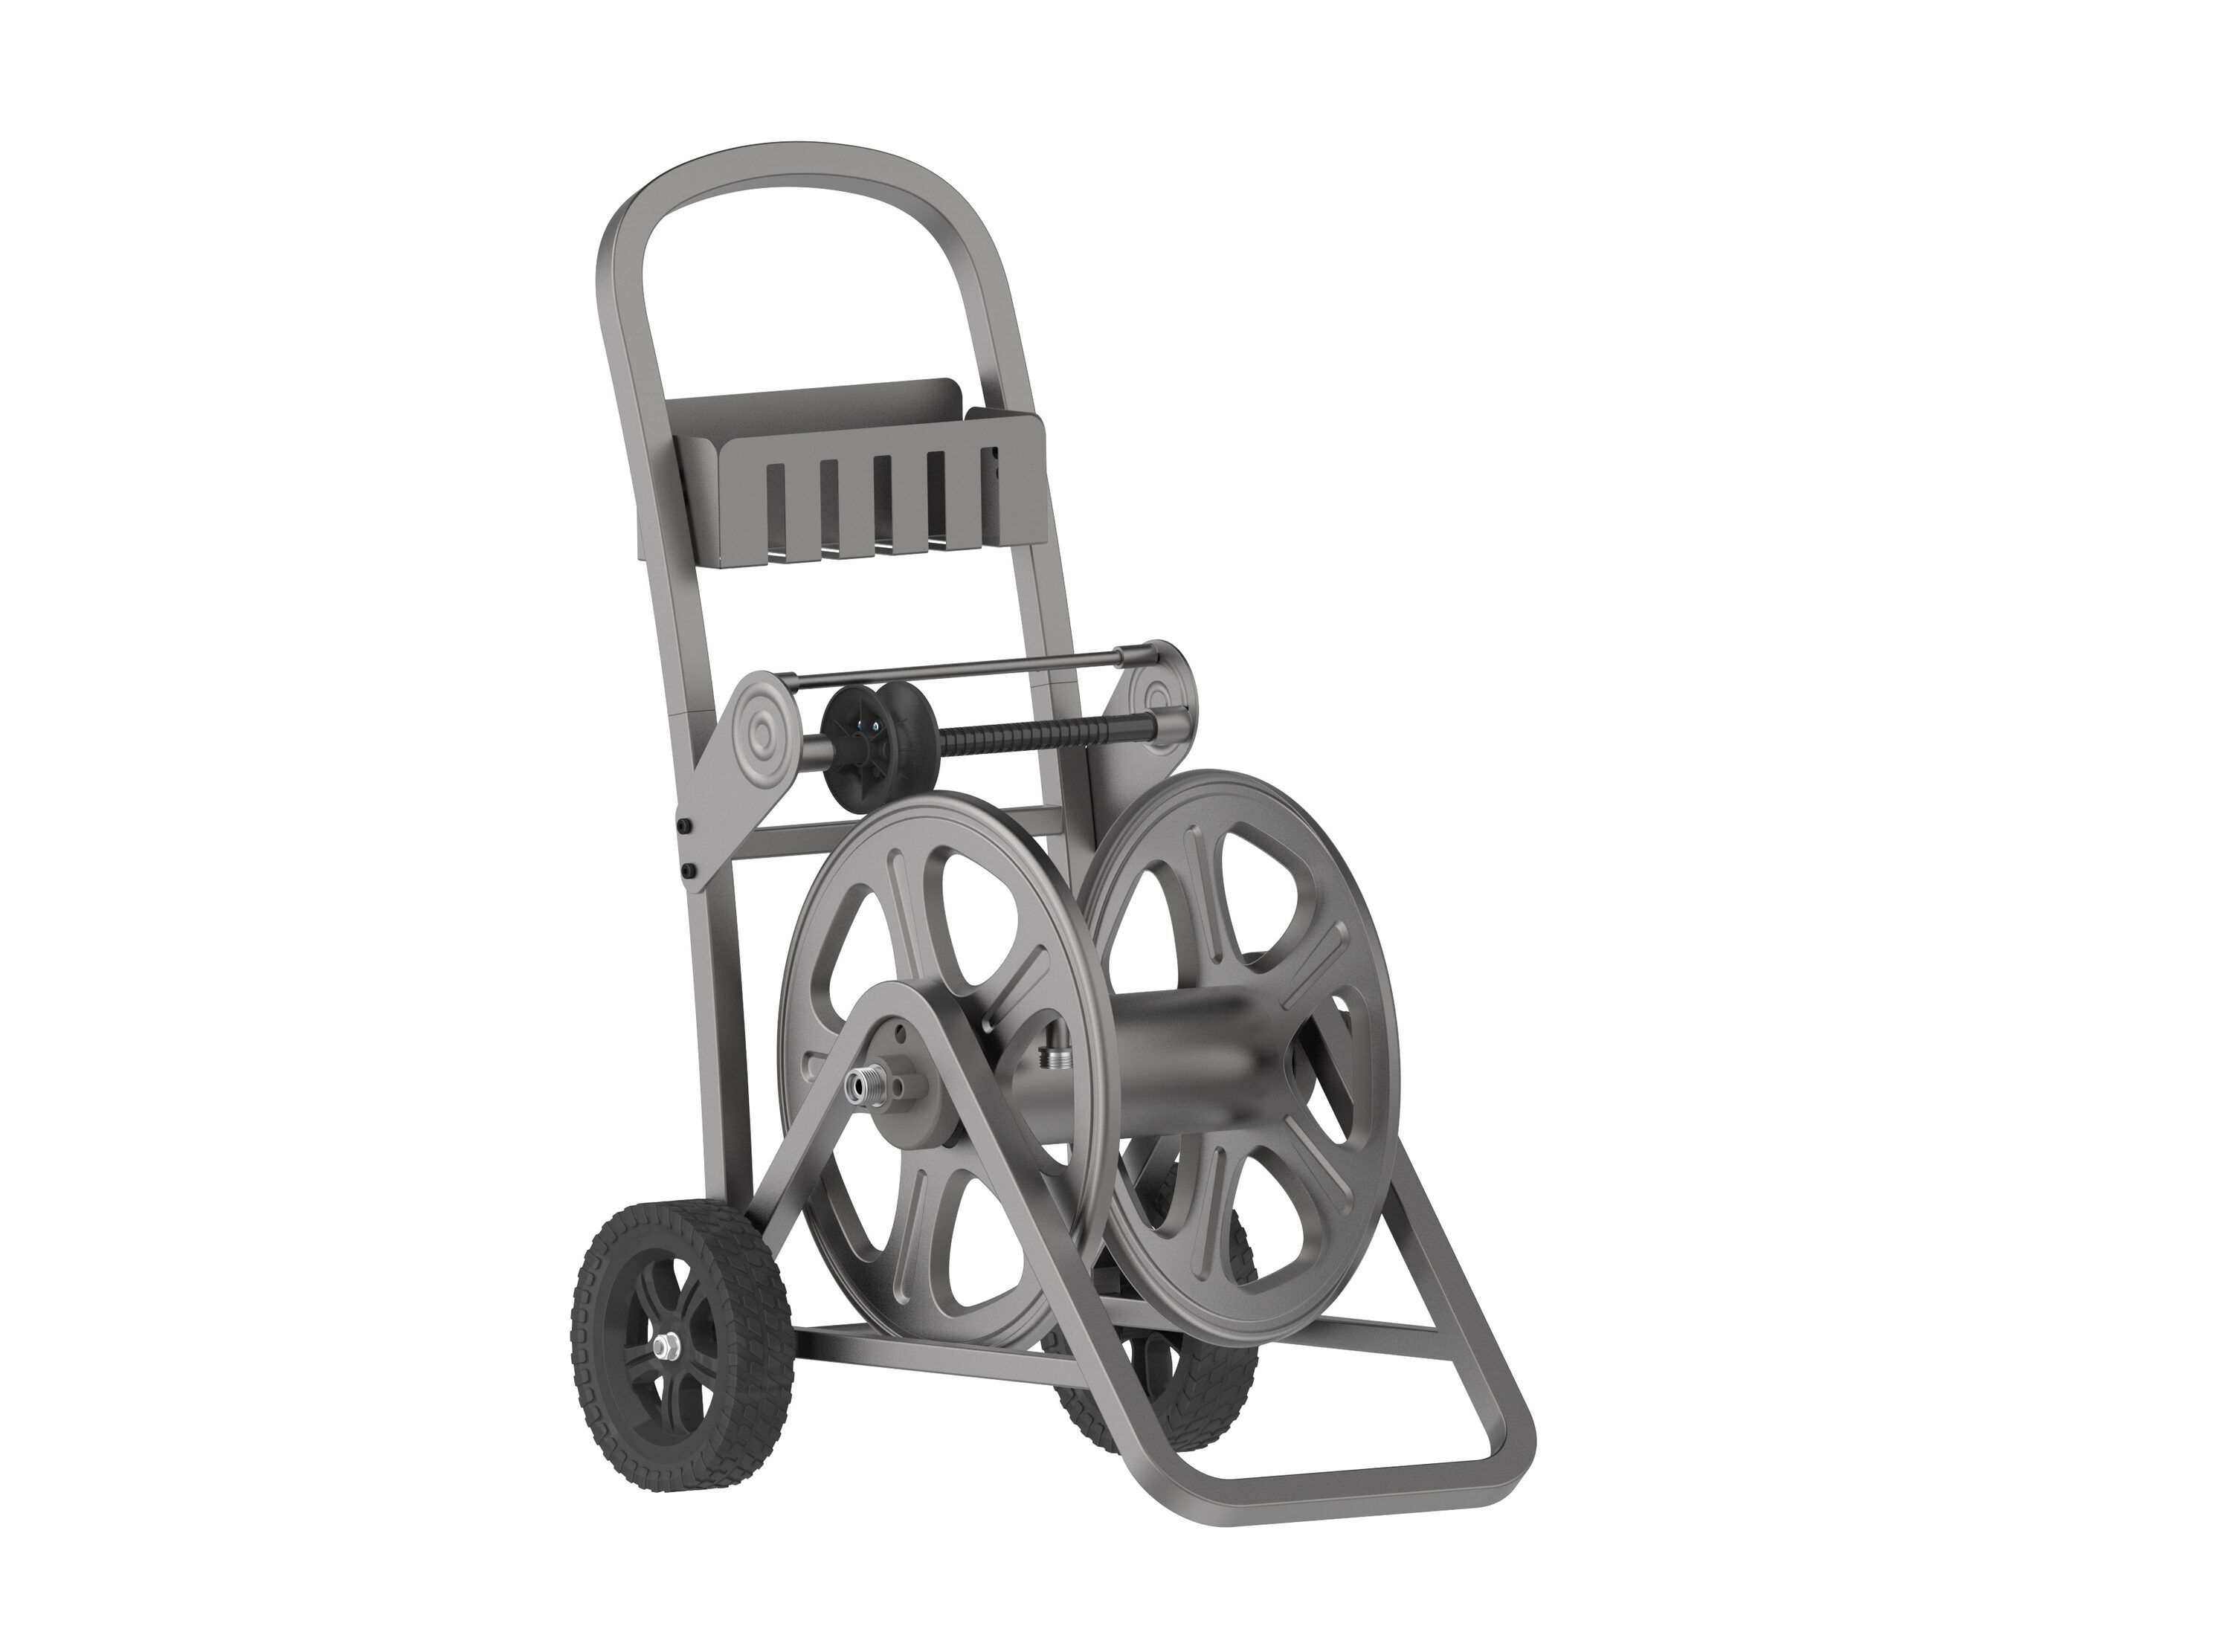 Glitzhome Portable Steel-Stainless Cart Garden Hose Reel, 250-ft